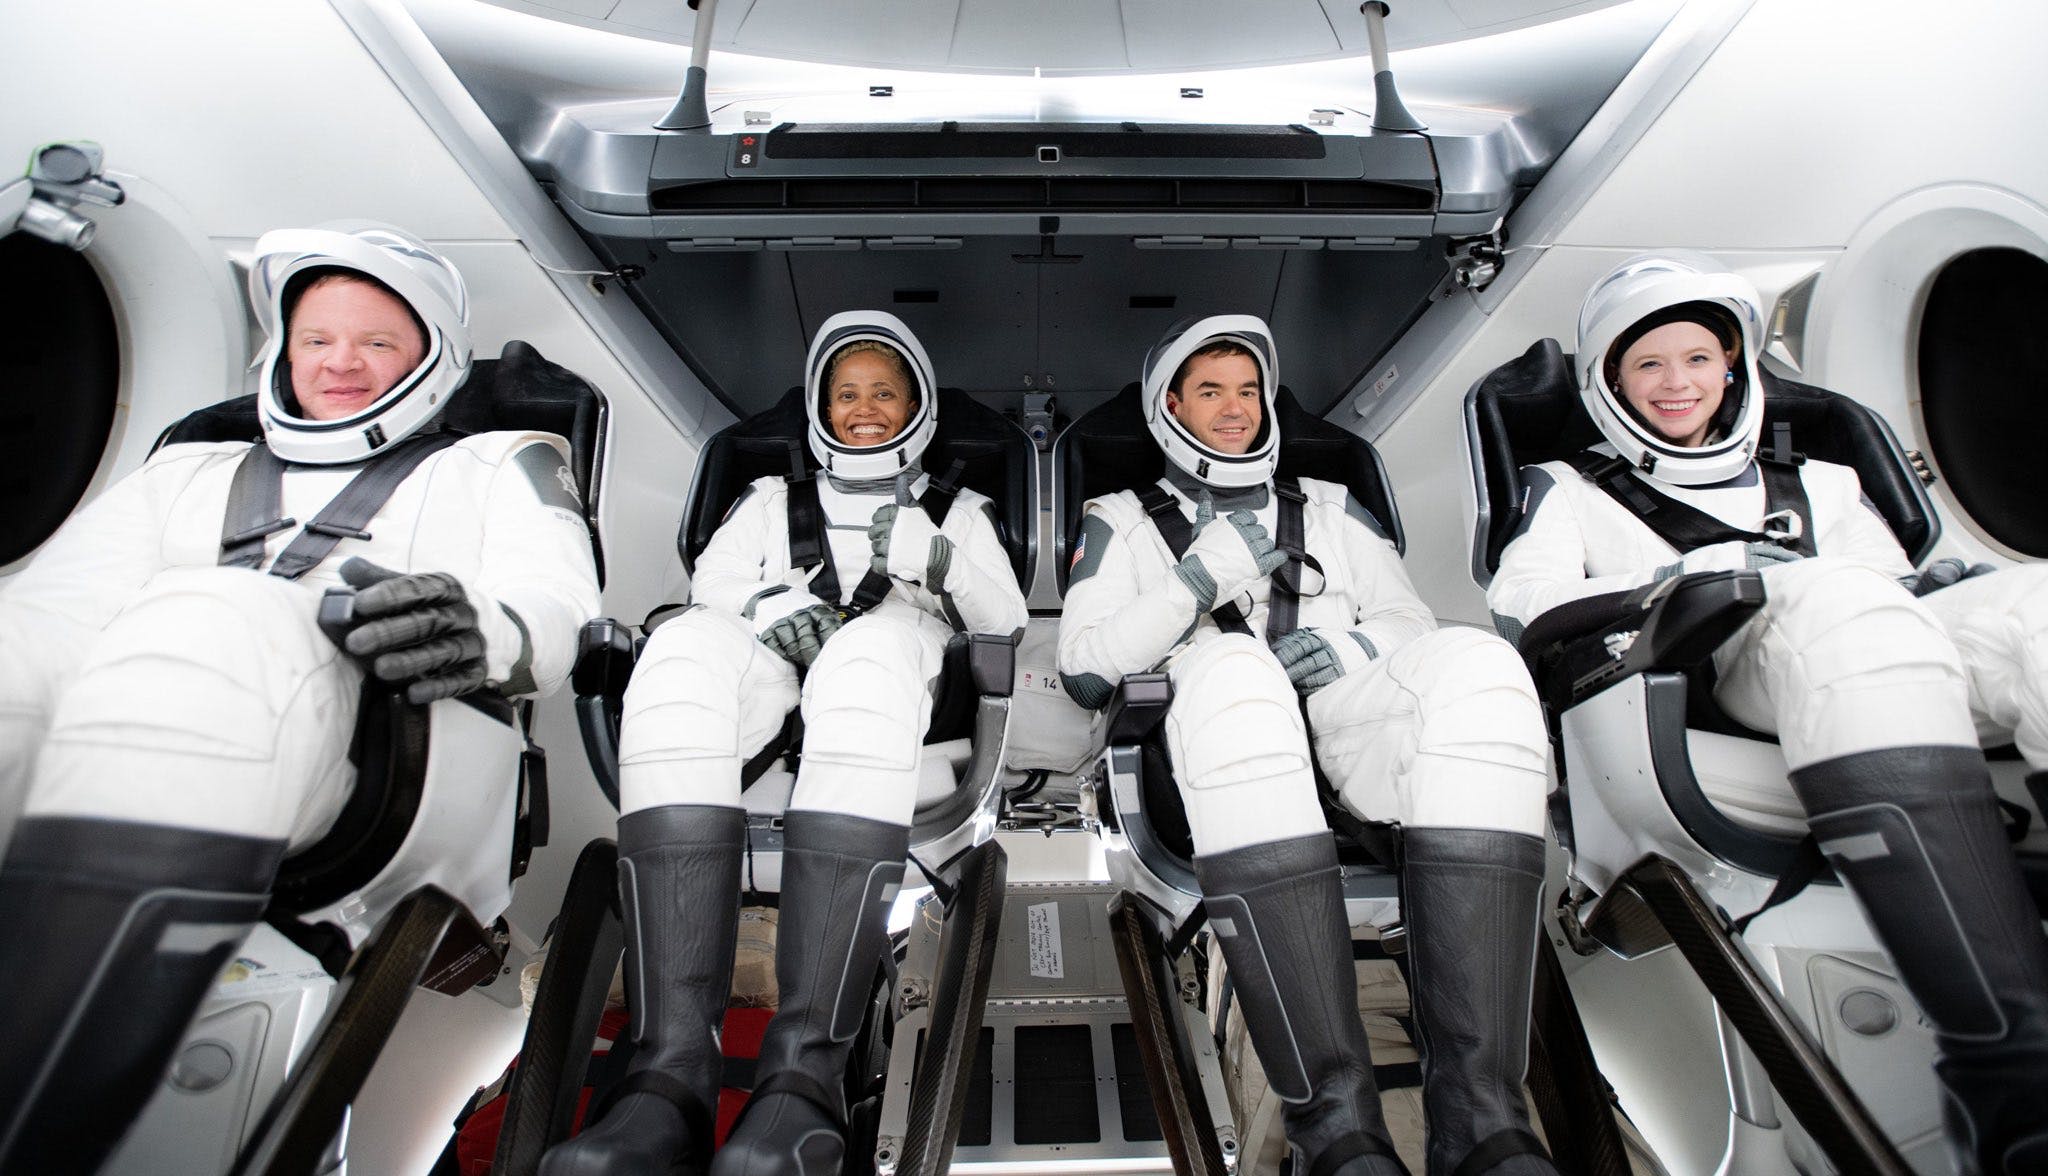 Inspiration4 passengers sit inside crew dragon spaceship seats wearing white spacesuits